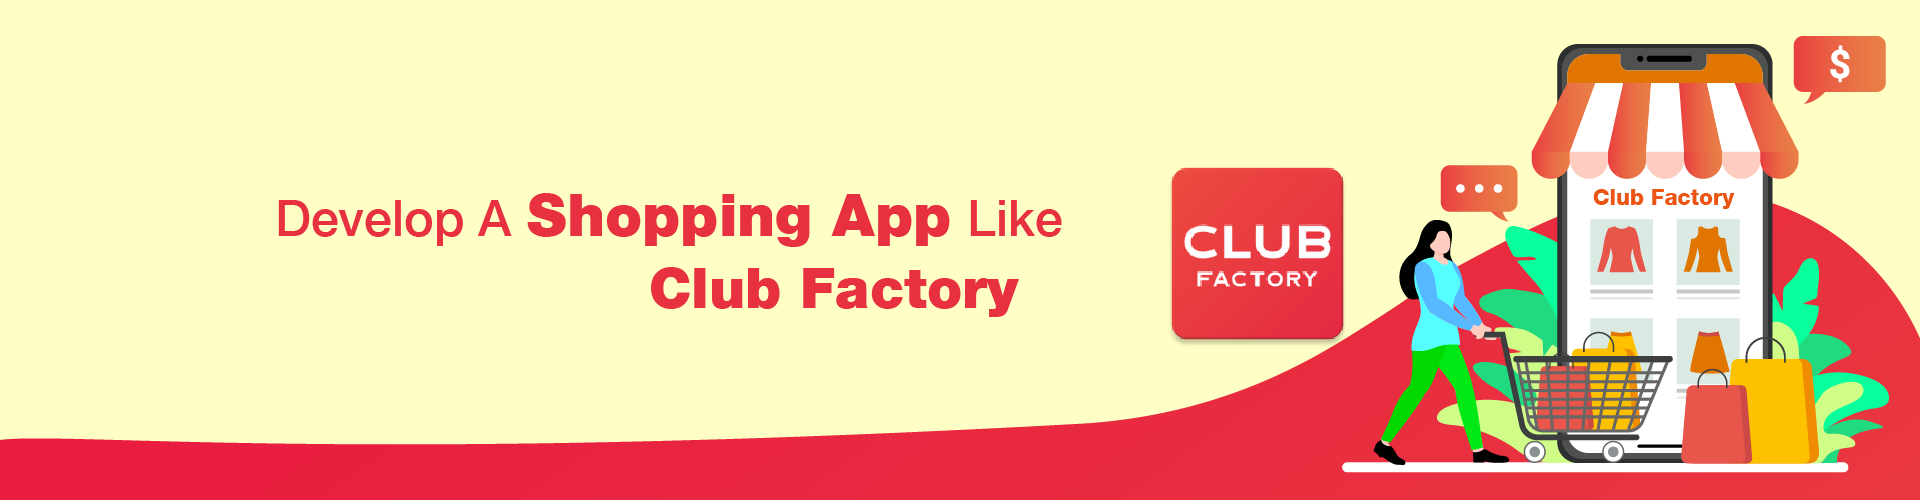 online shopping clubfactory clone app development